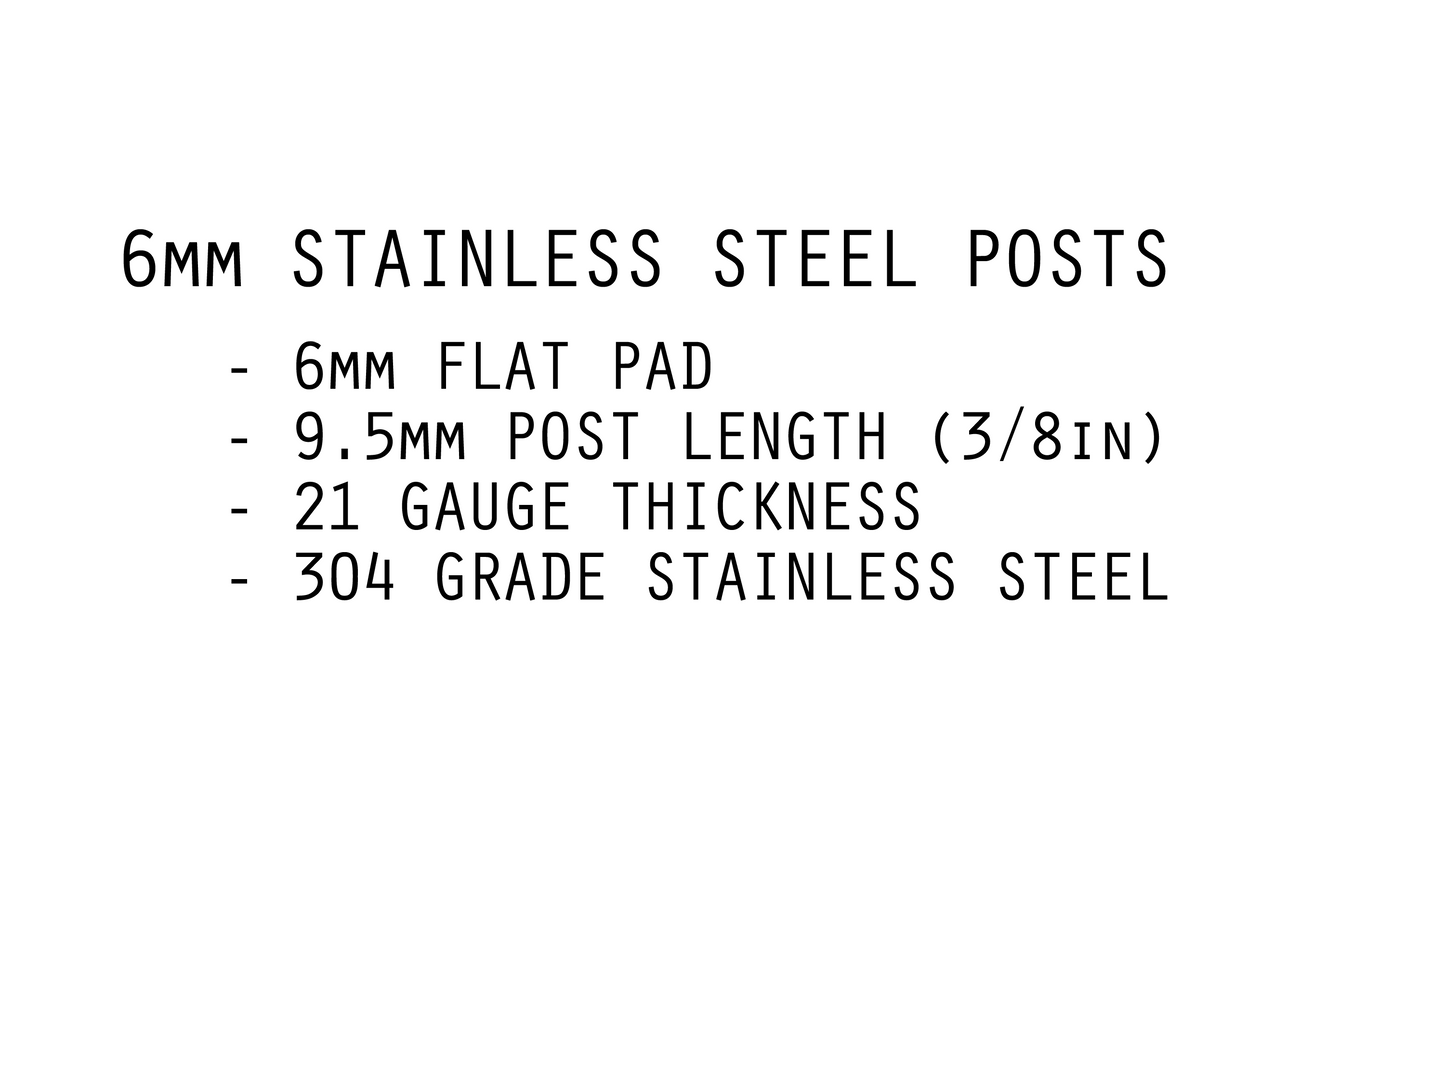 6mm Stainless Steel Earring Posts, 9.5mm Length, 21 gauge, Hypoallergenic 304 Grade Stainless Steel Flat Pad Post